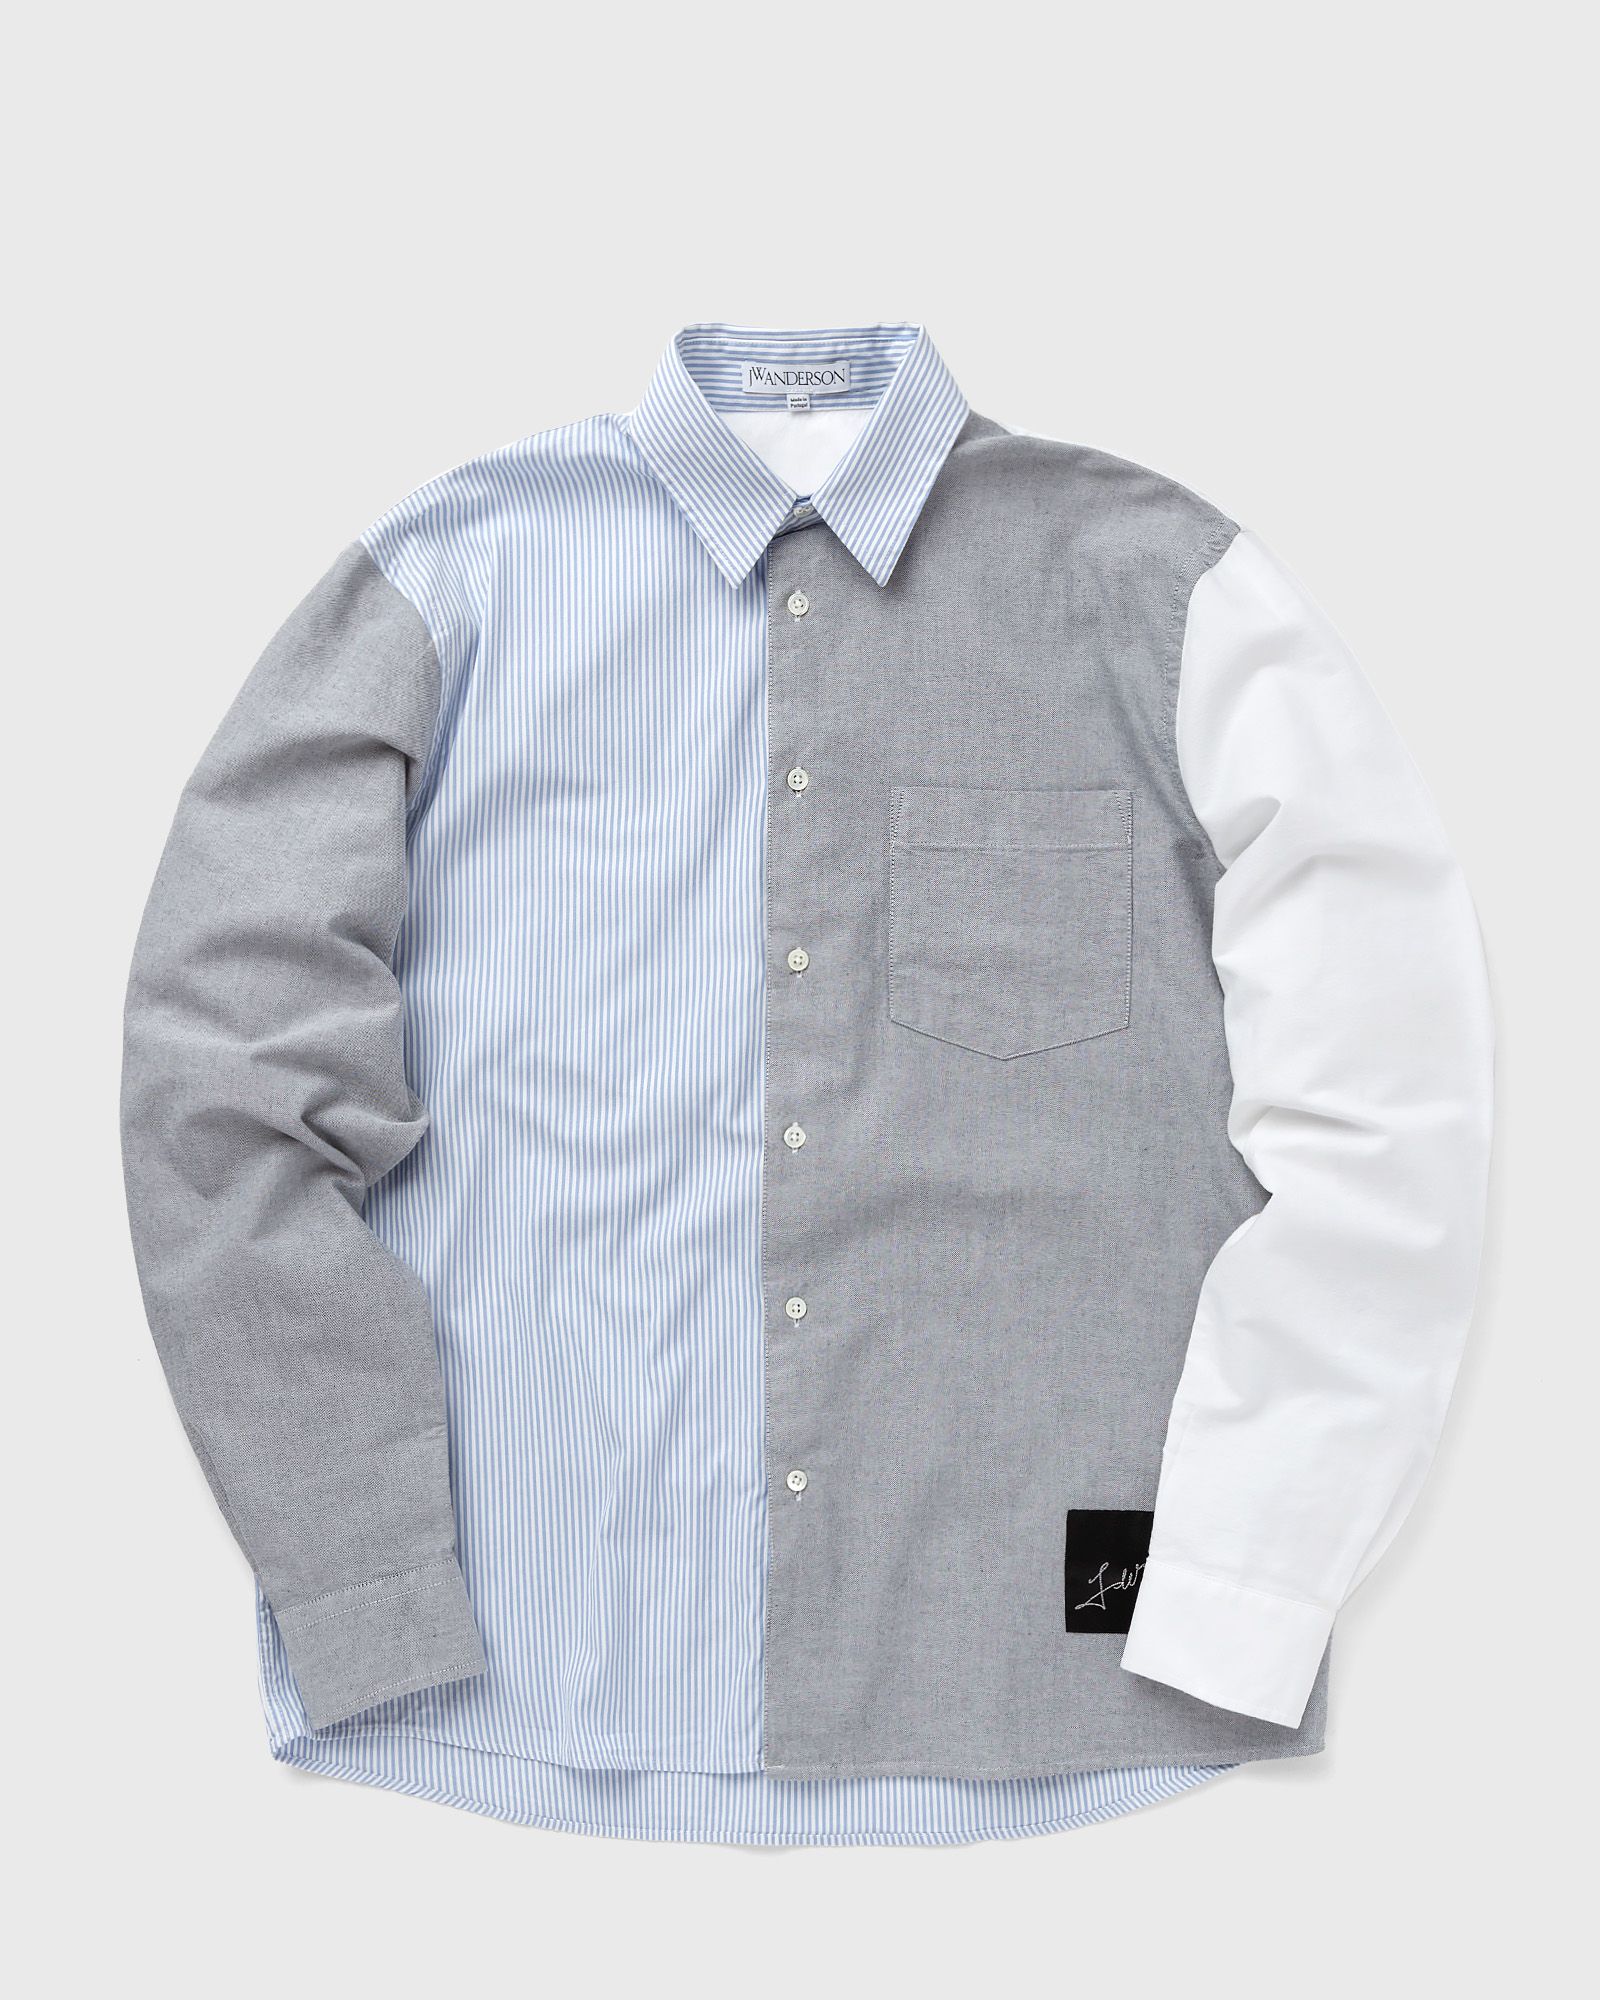 JW Anderson - classic fit patchwork shirt men longsleeves blue|grey in größe:m